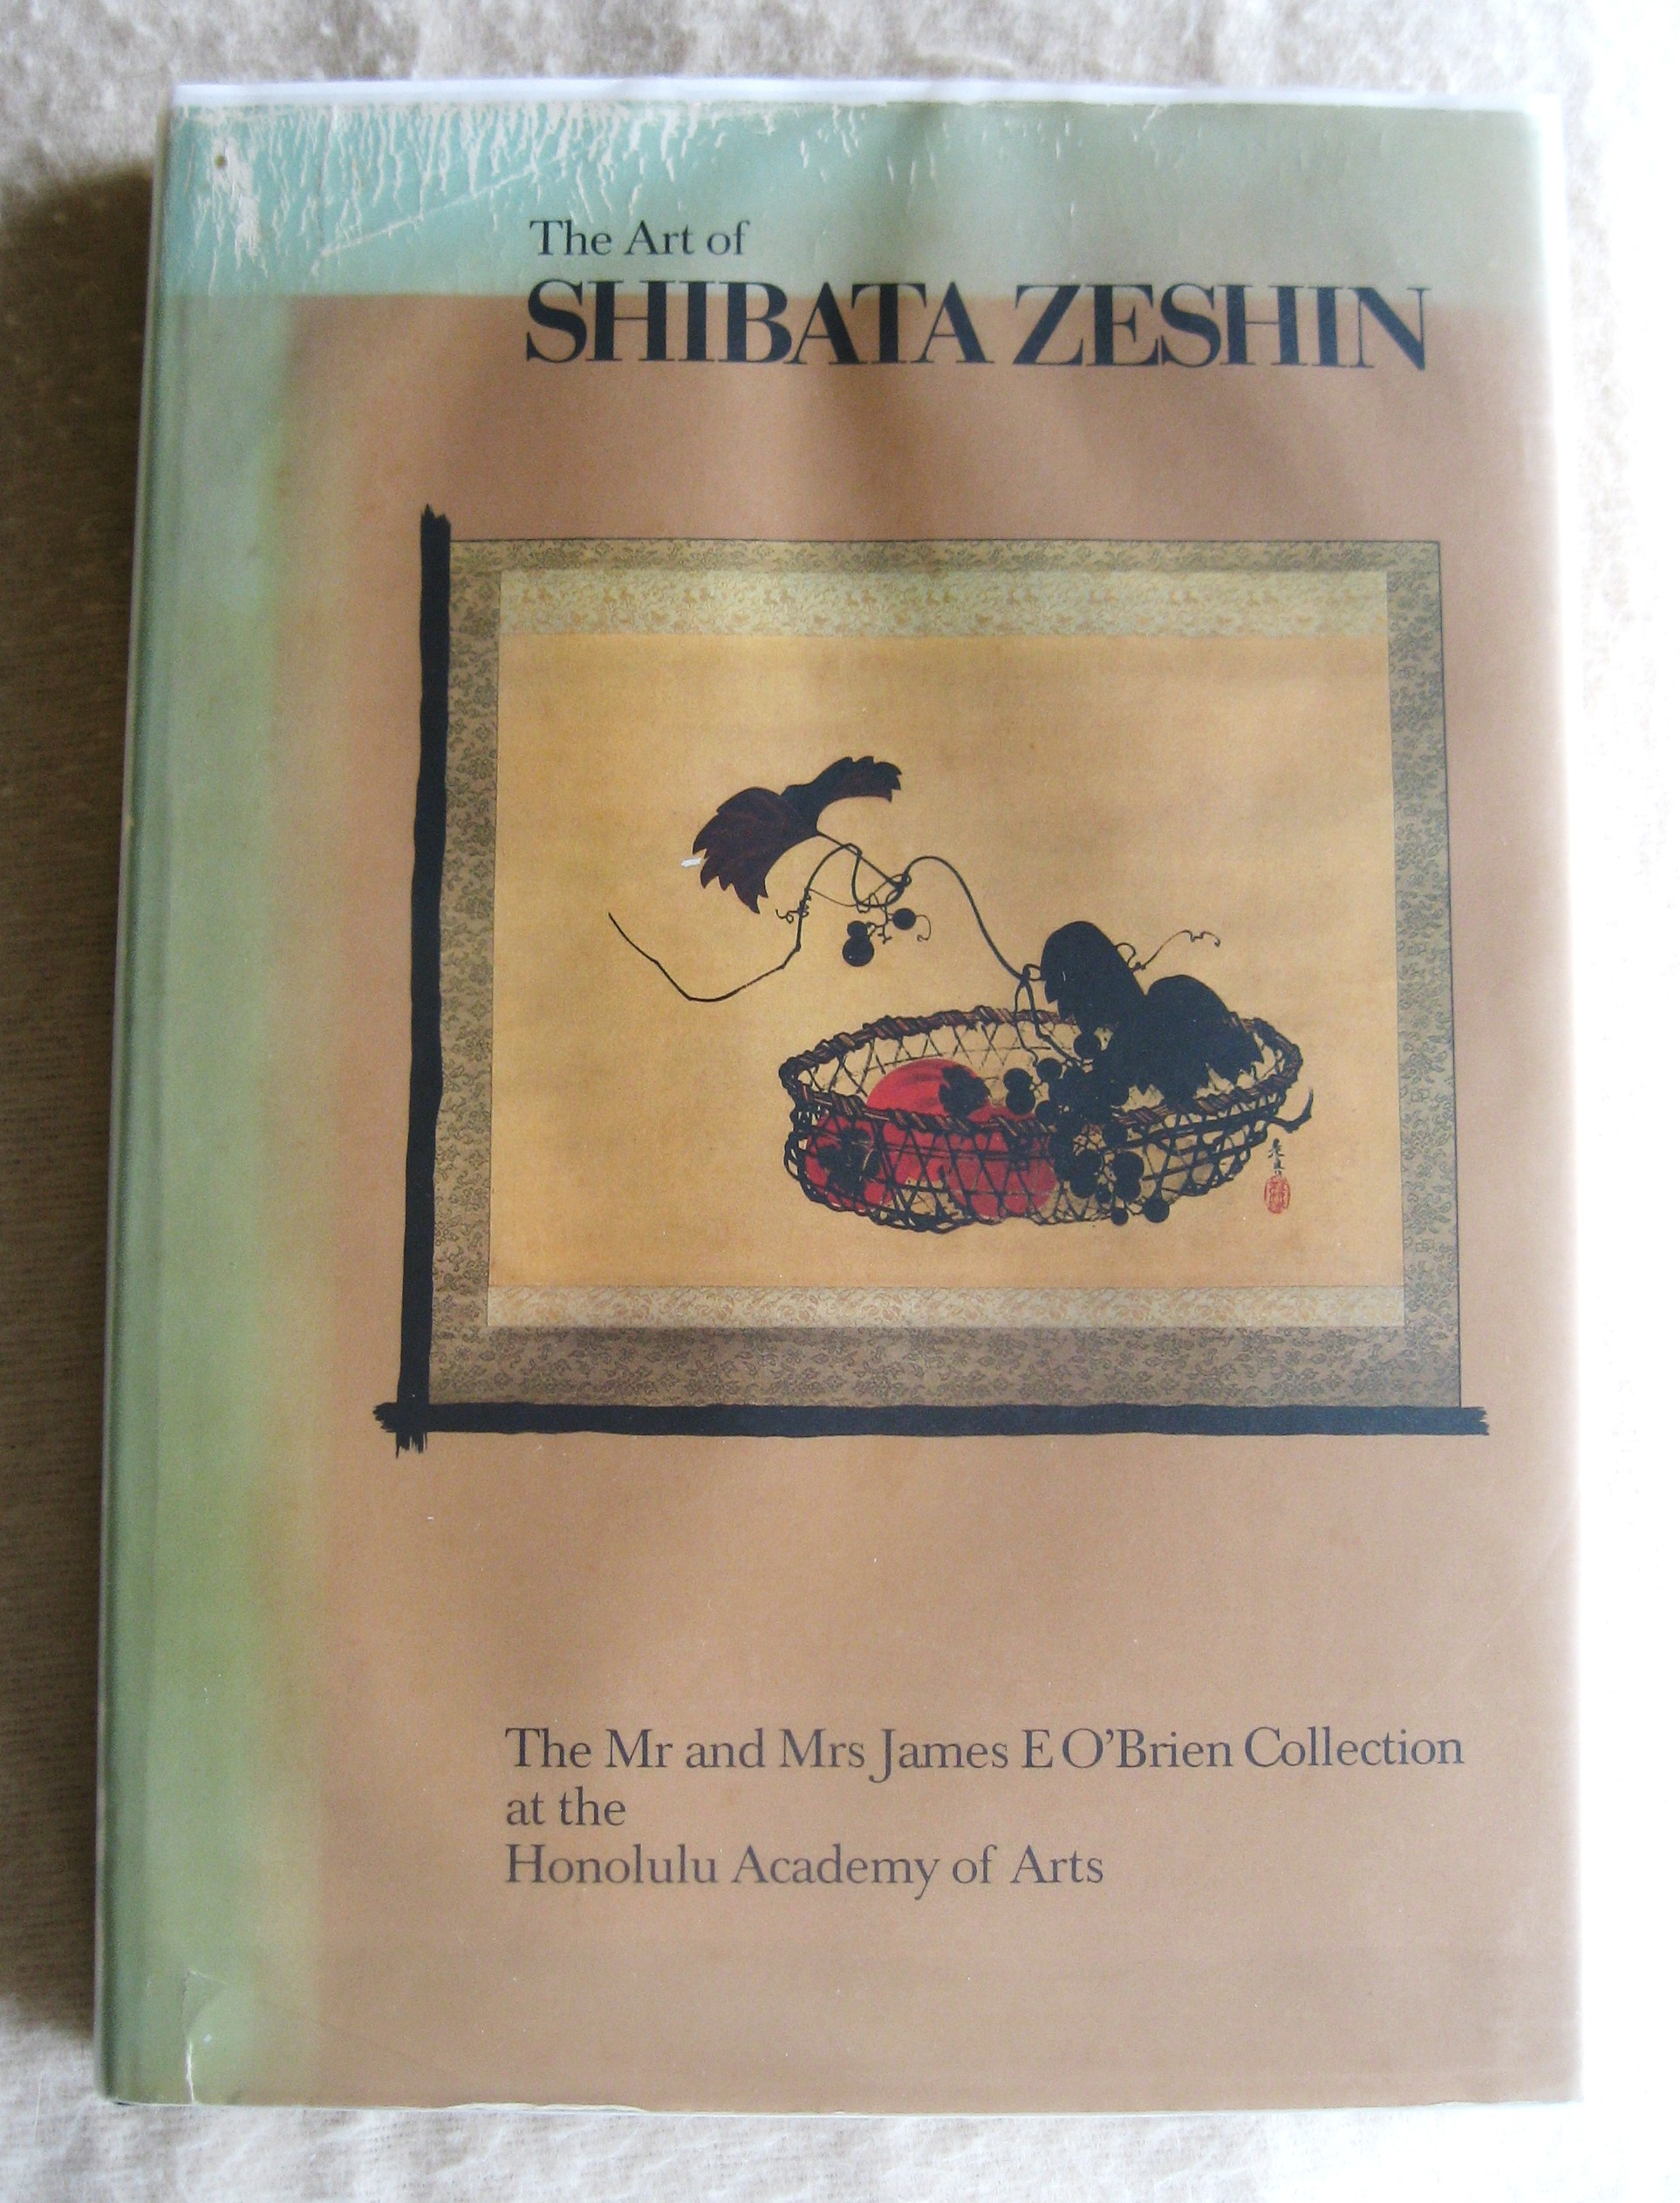 The Art of Shibata Zeshin